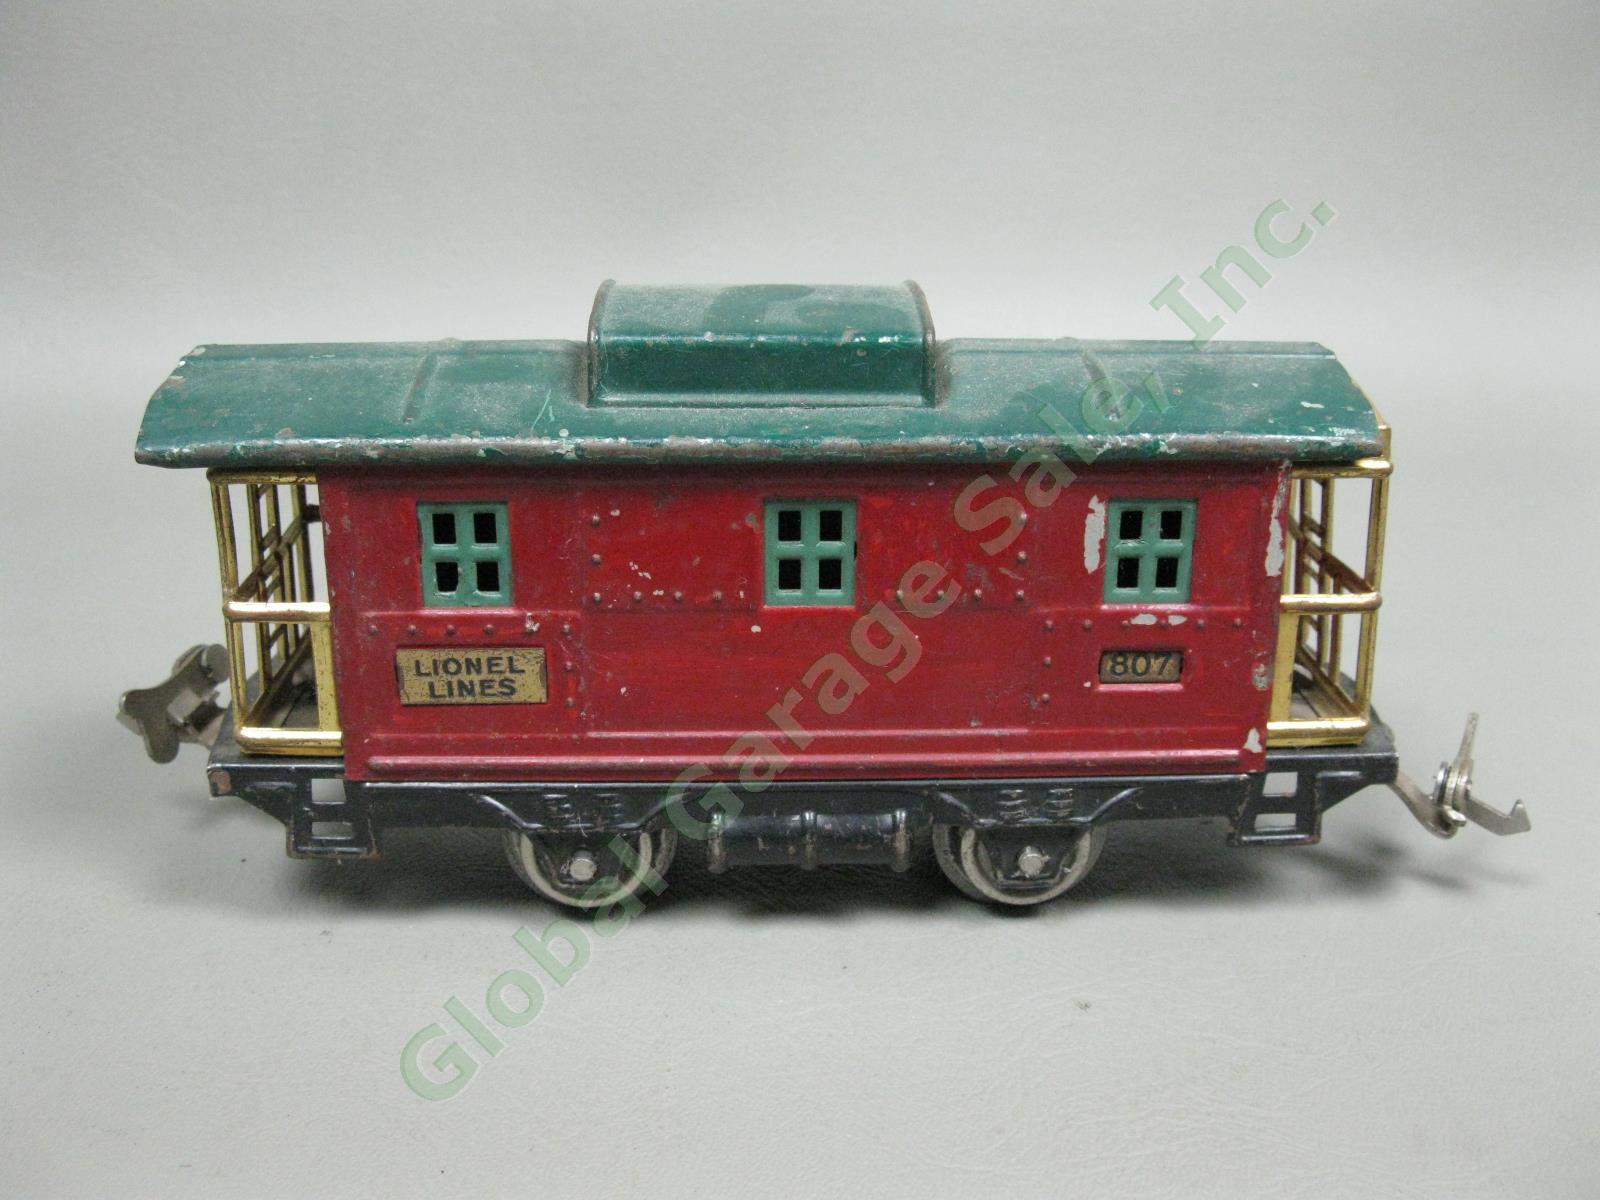 Antique 1920s-1930s Lionel Lines O Gauge Model Train Set #803 804 805 806 807 NR 13